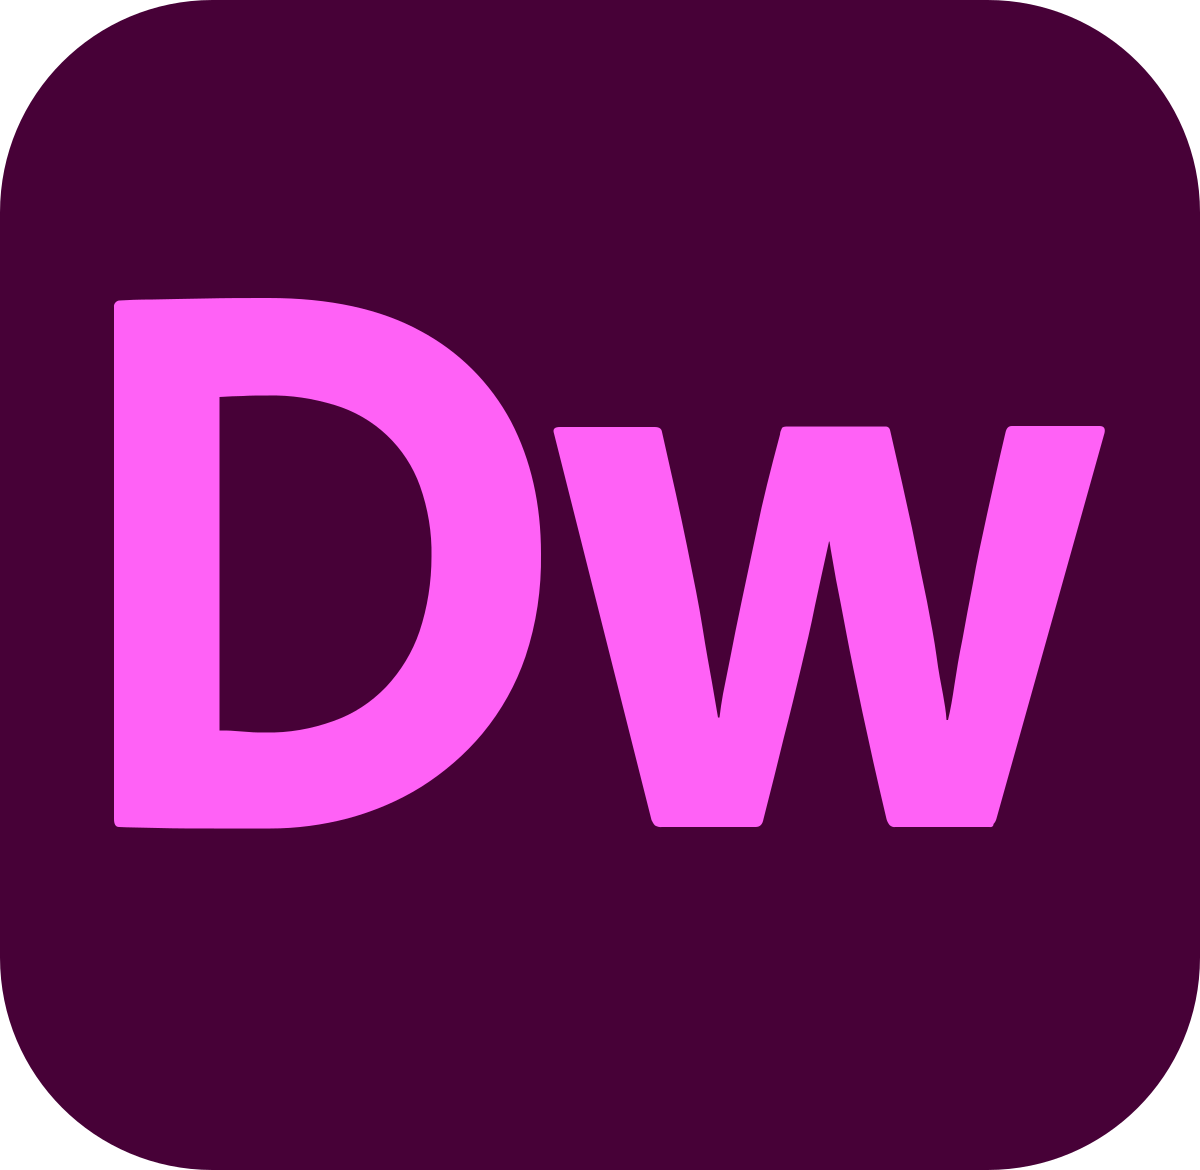 dreamweaver software download free